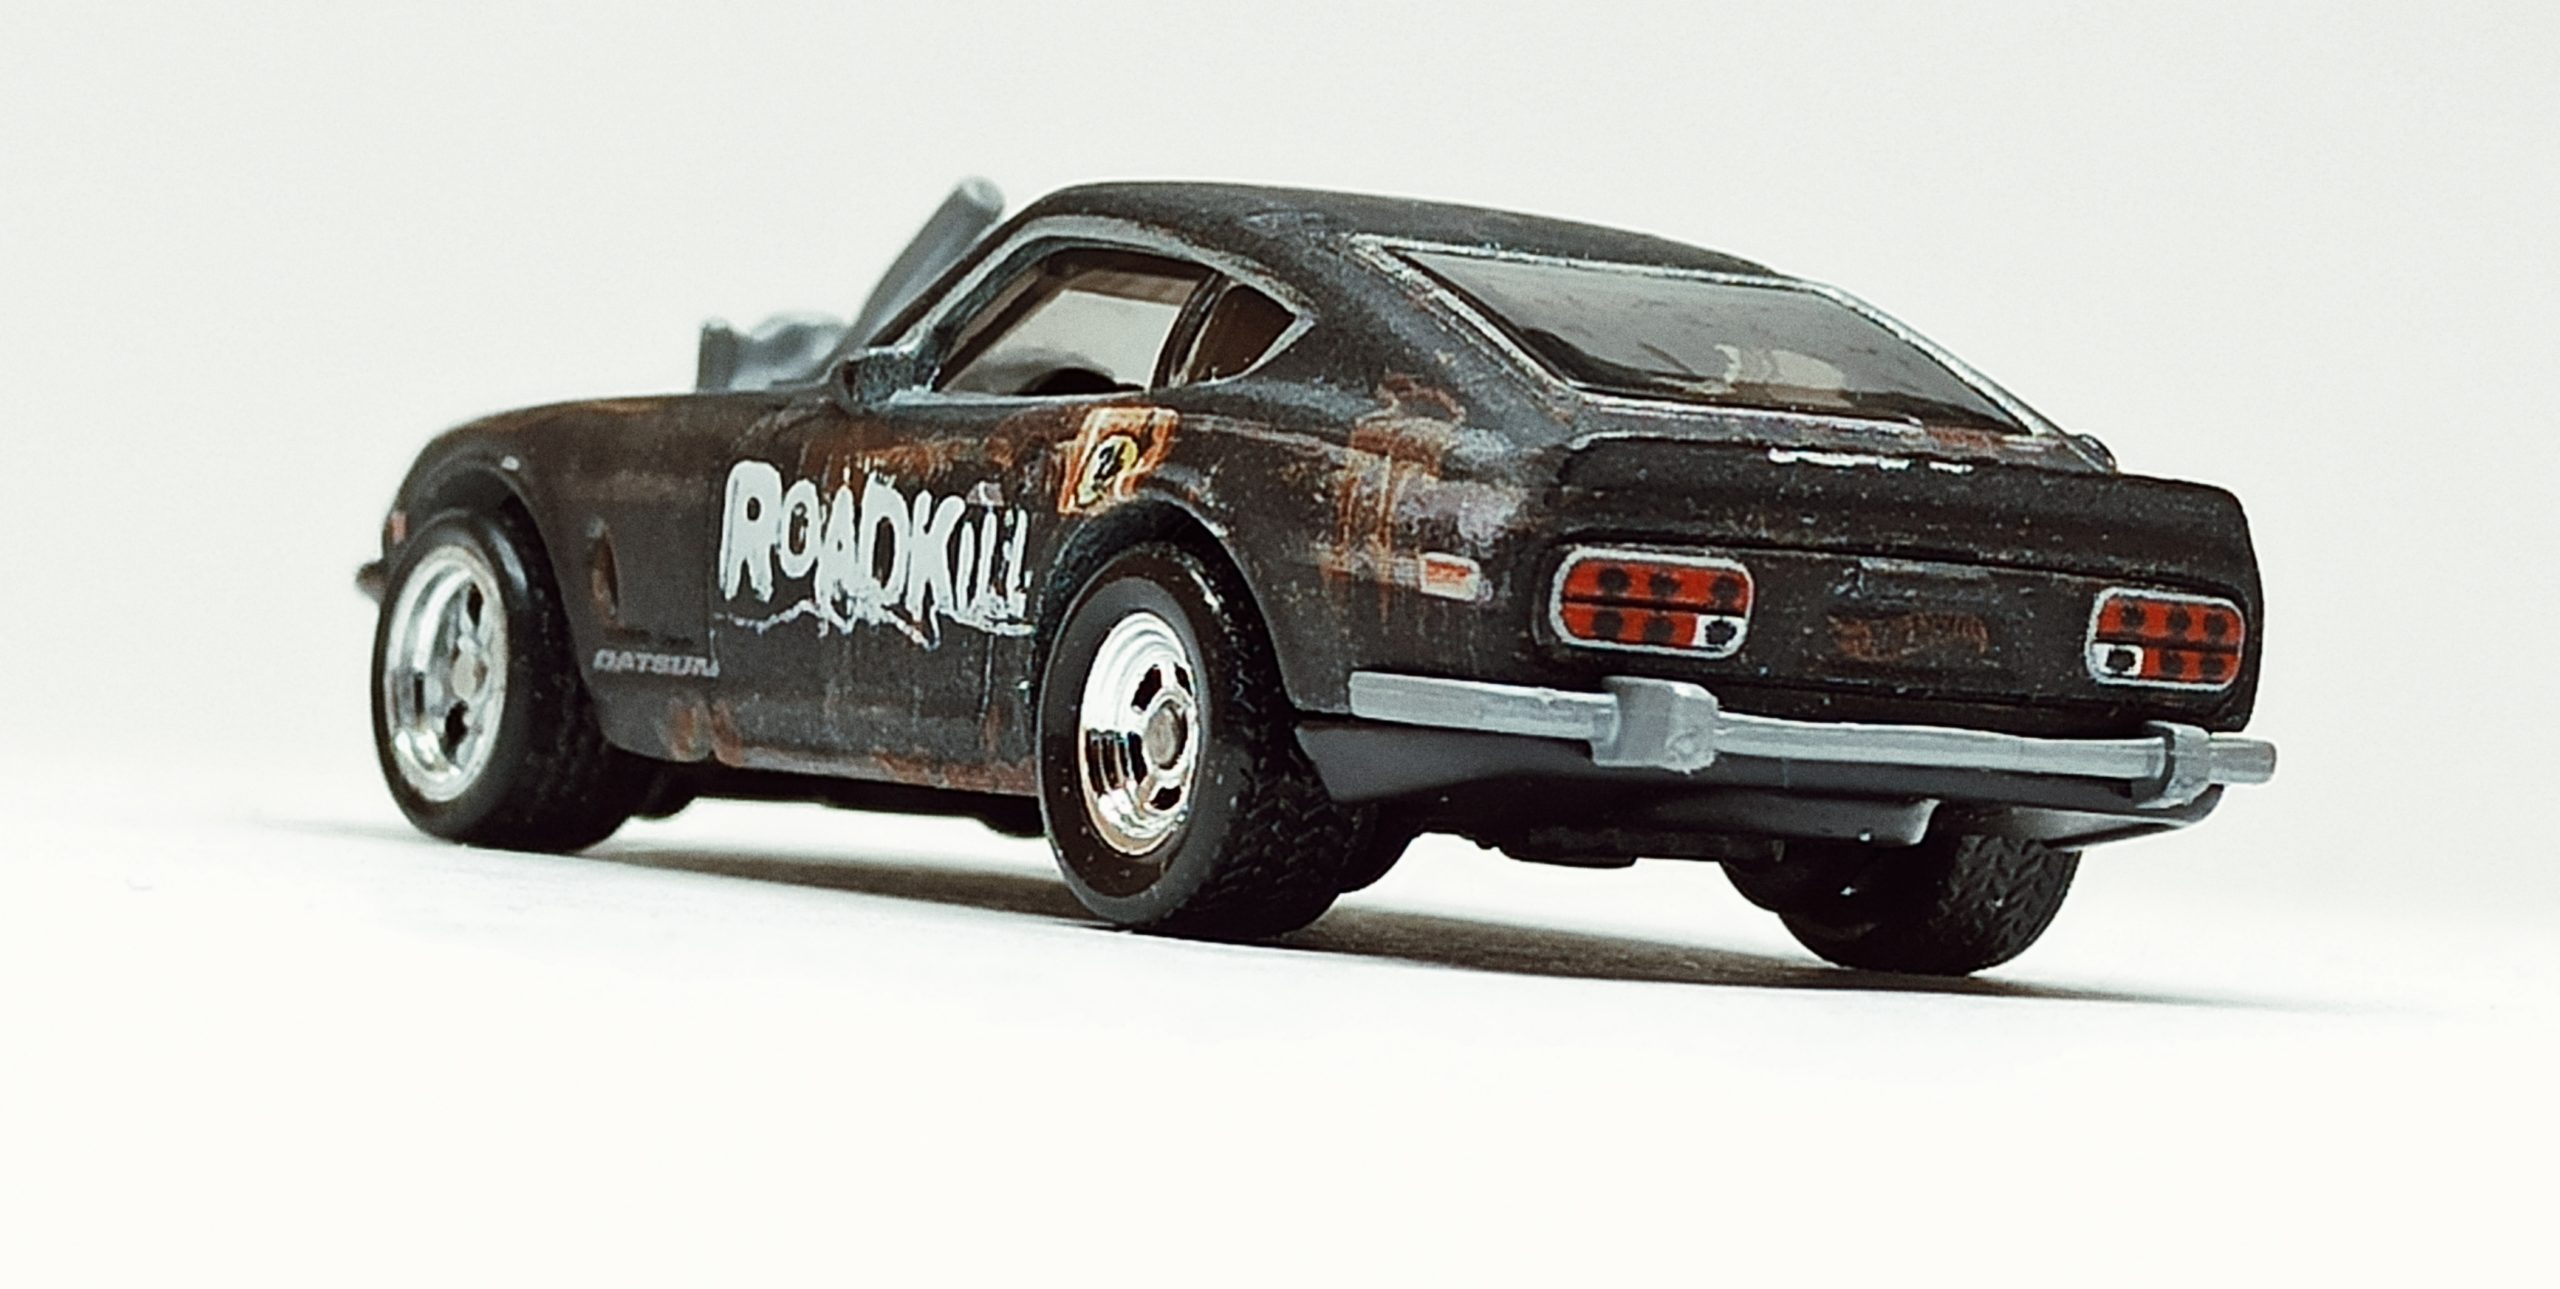 Hot Wheels Custom '71 Datsun 240Z "Roadkill Rotsun" (GRF98) 2020 Motor Trend: Roadkill Promotion black